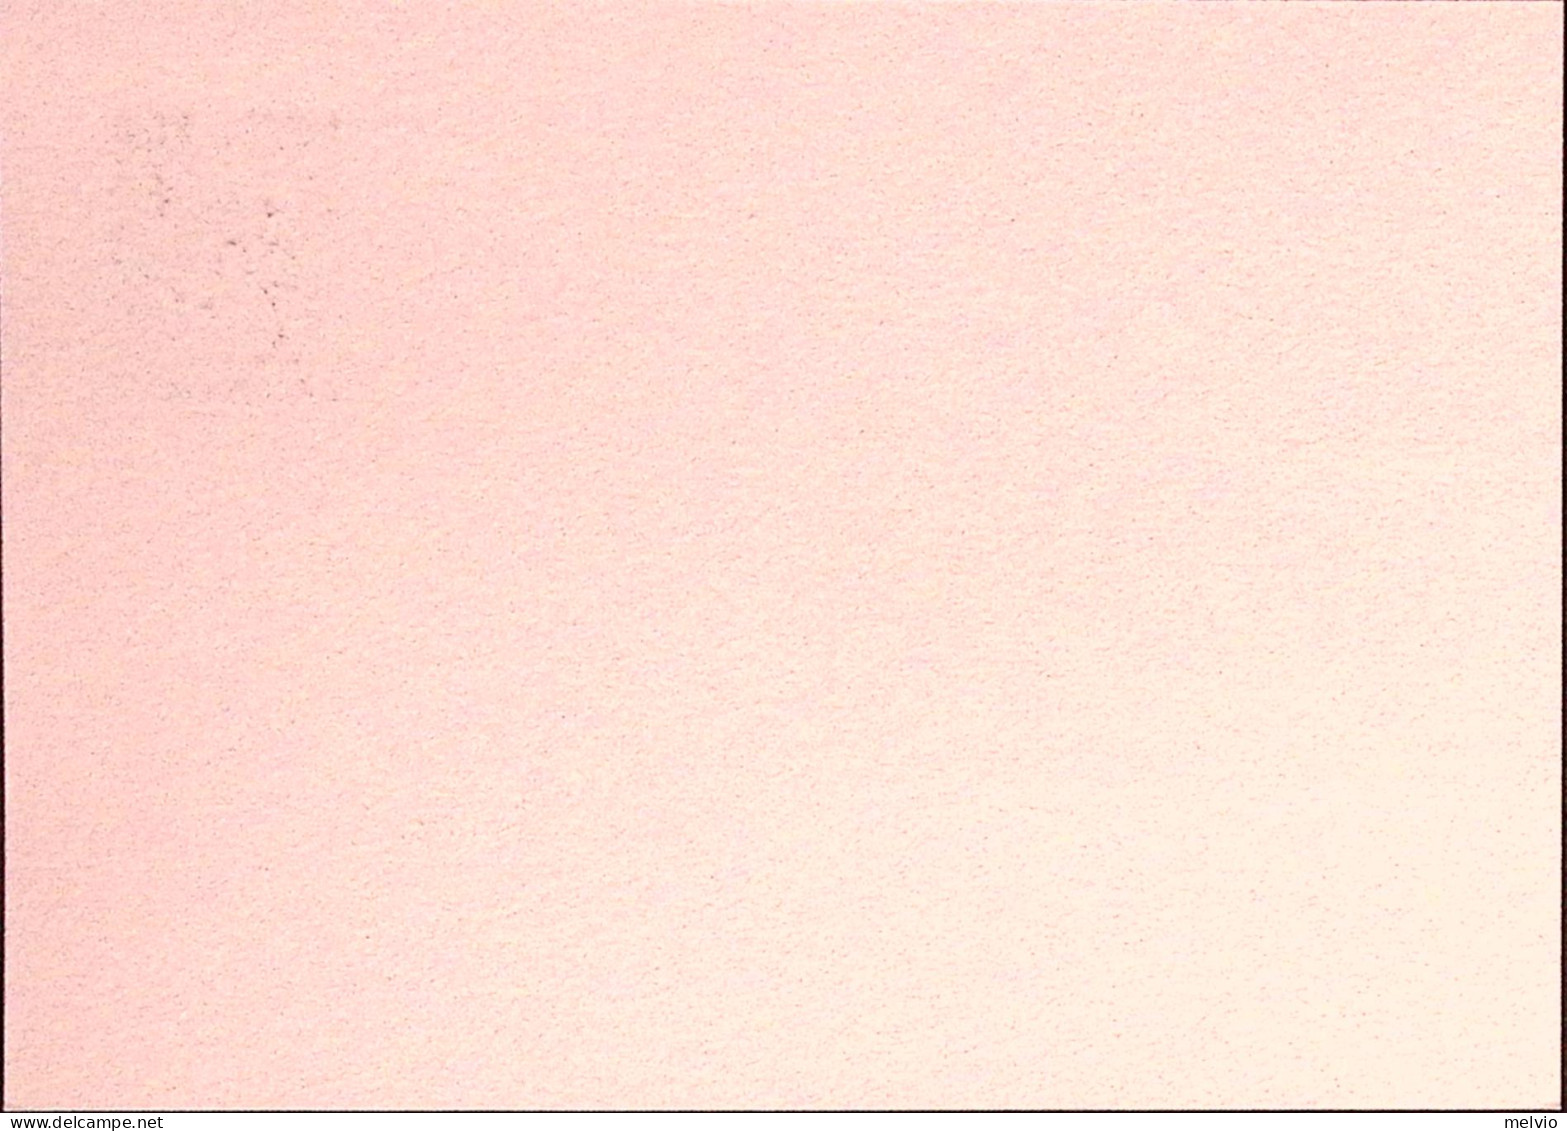 1993-ABRUZZOPHIL Cartolina Postale IPZS Lire 700 Con Ann.spec.(27.6) - Stamped Stationery